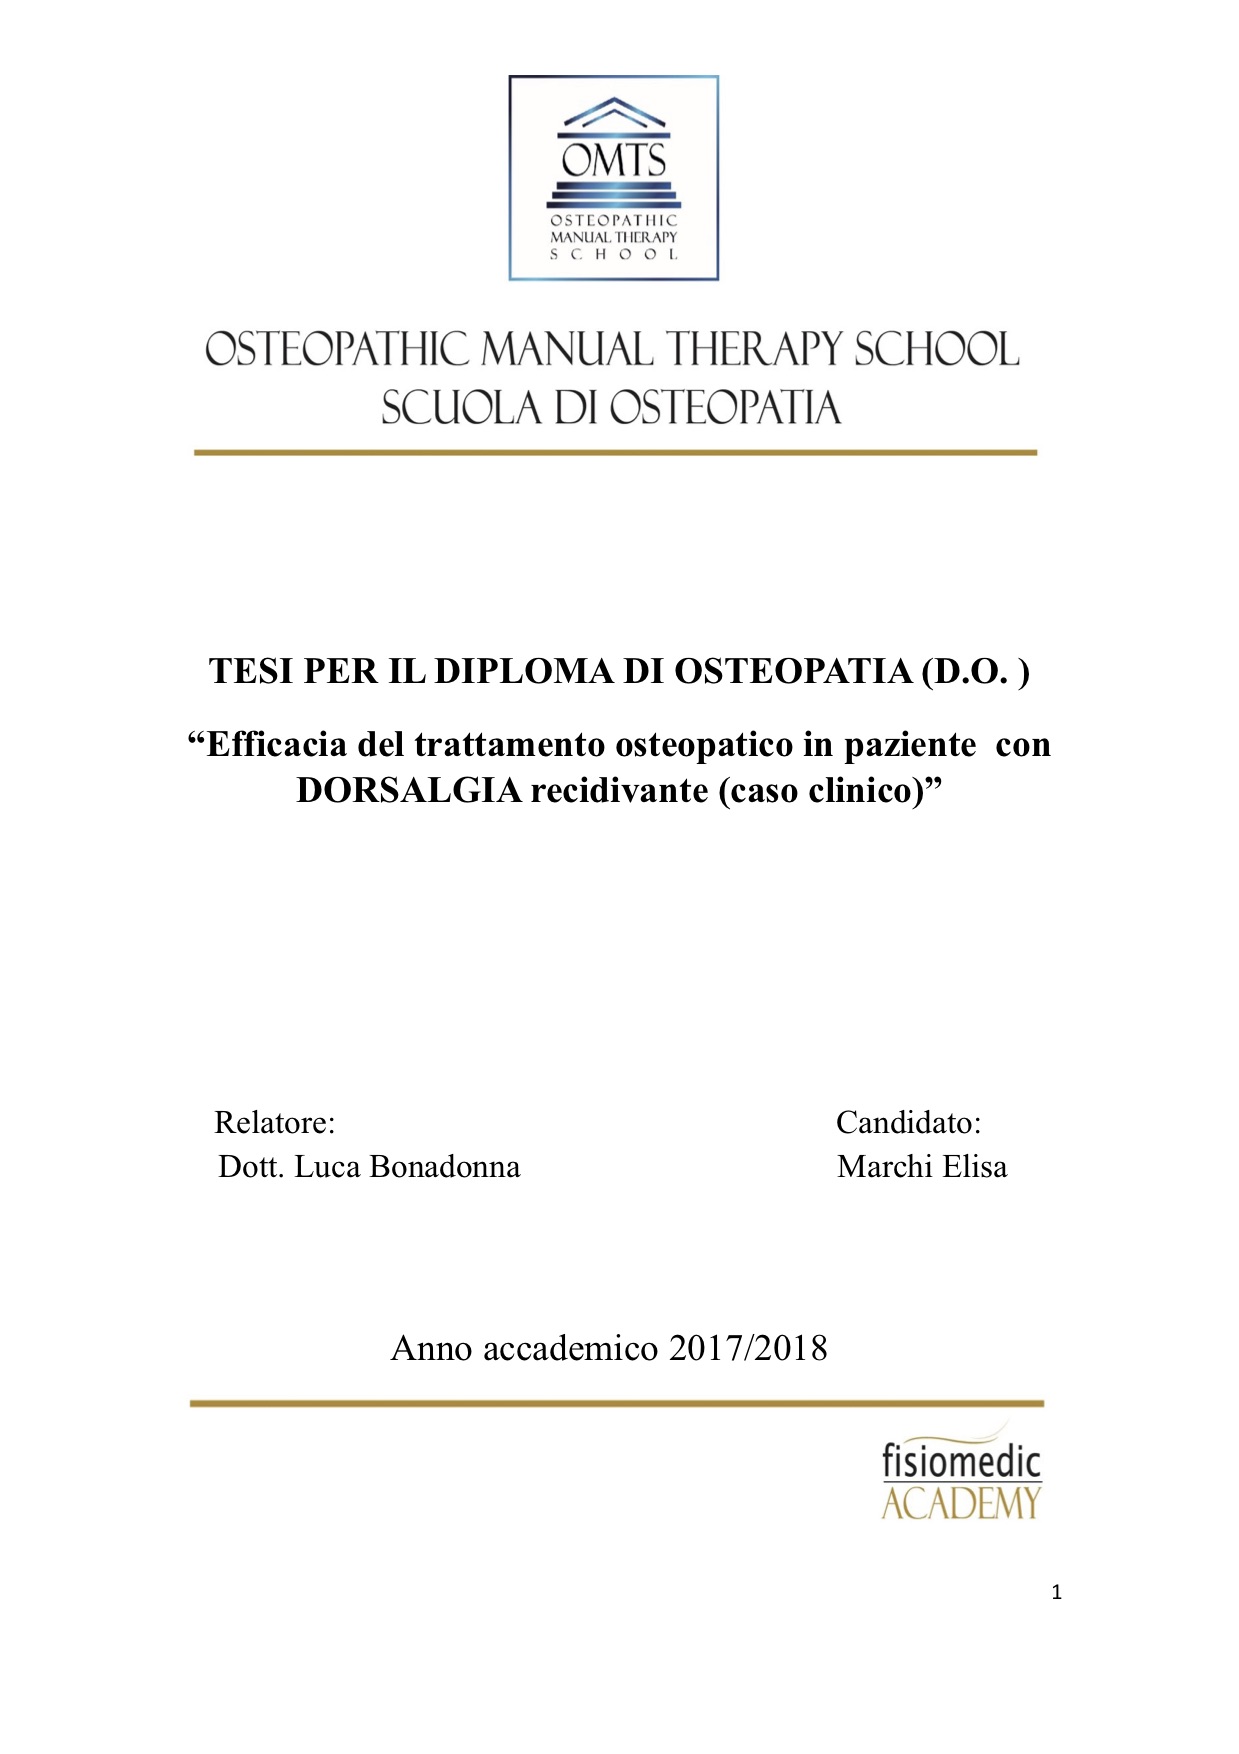 Marchi Elisa Tesi Diploma Osteopatia 2018